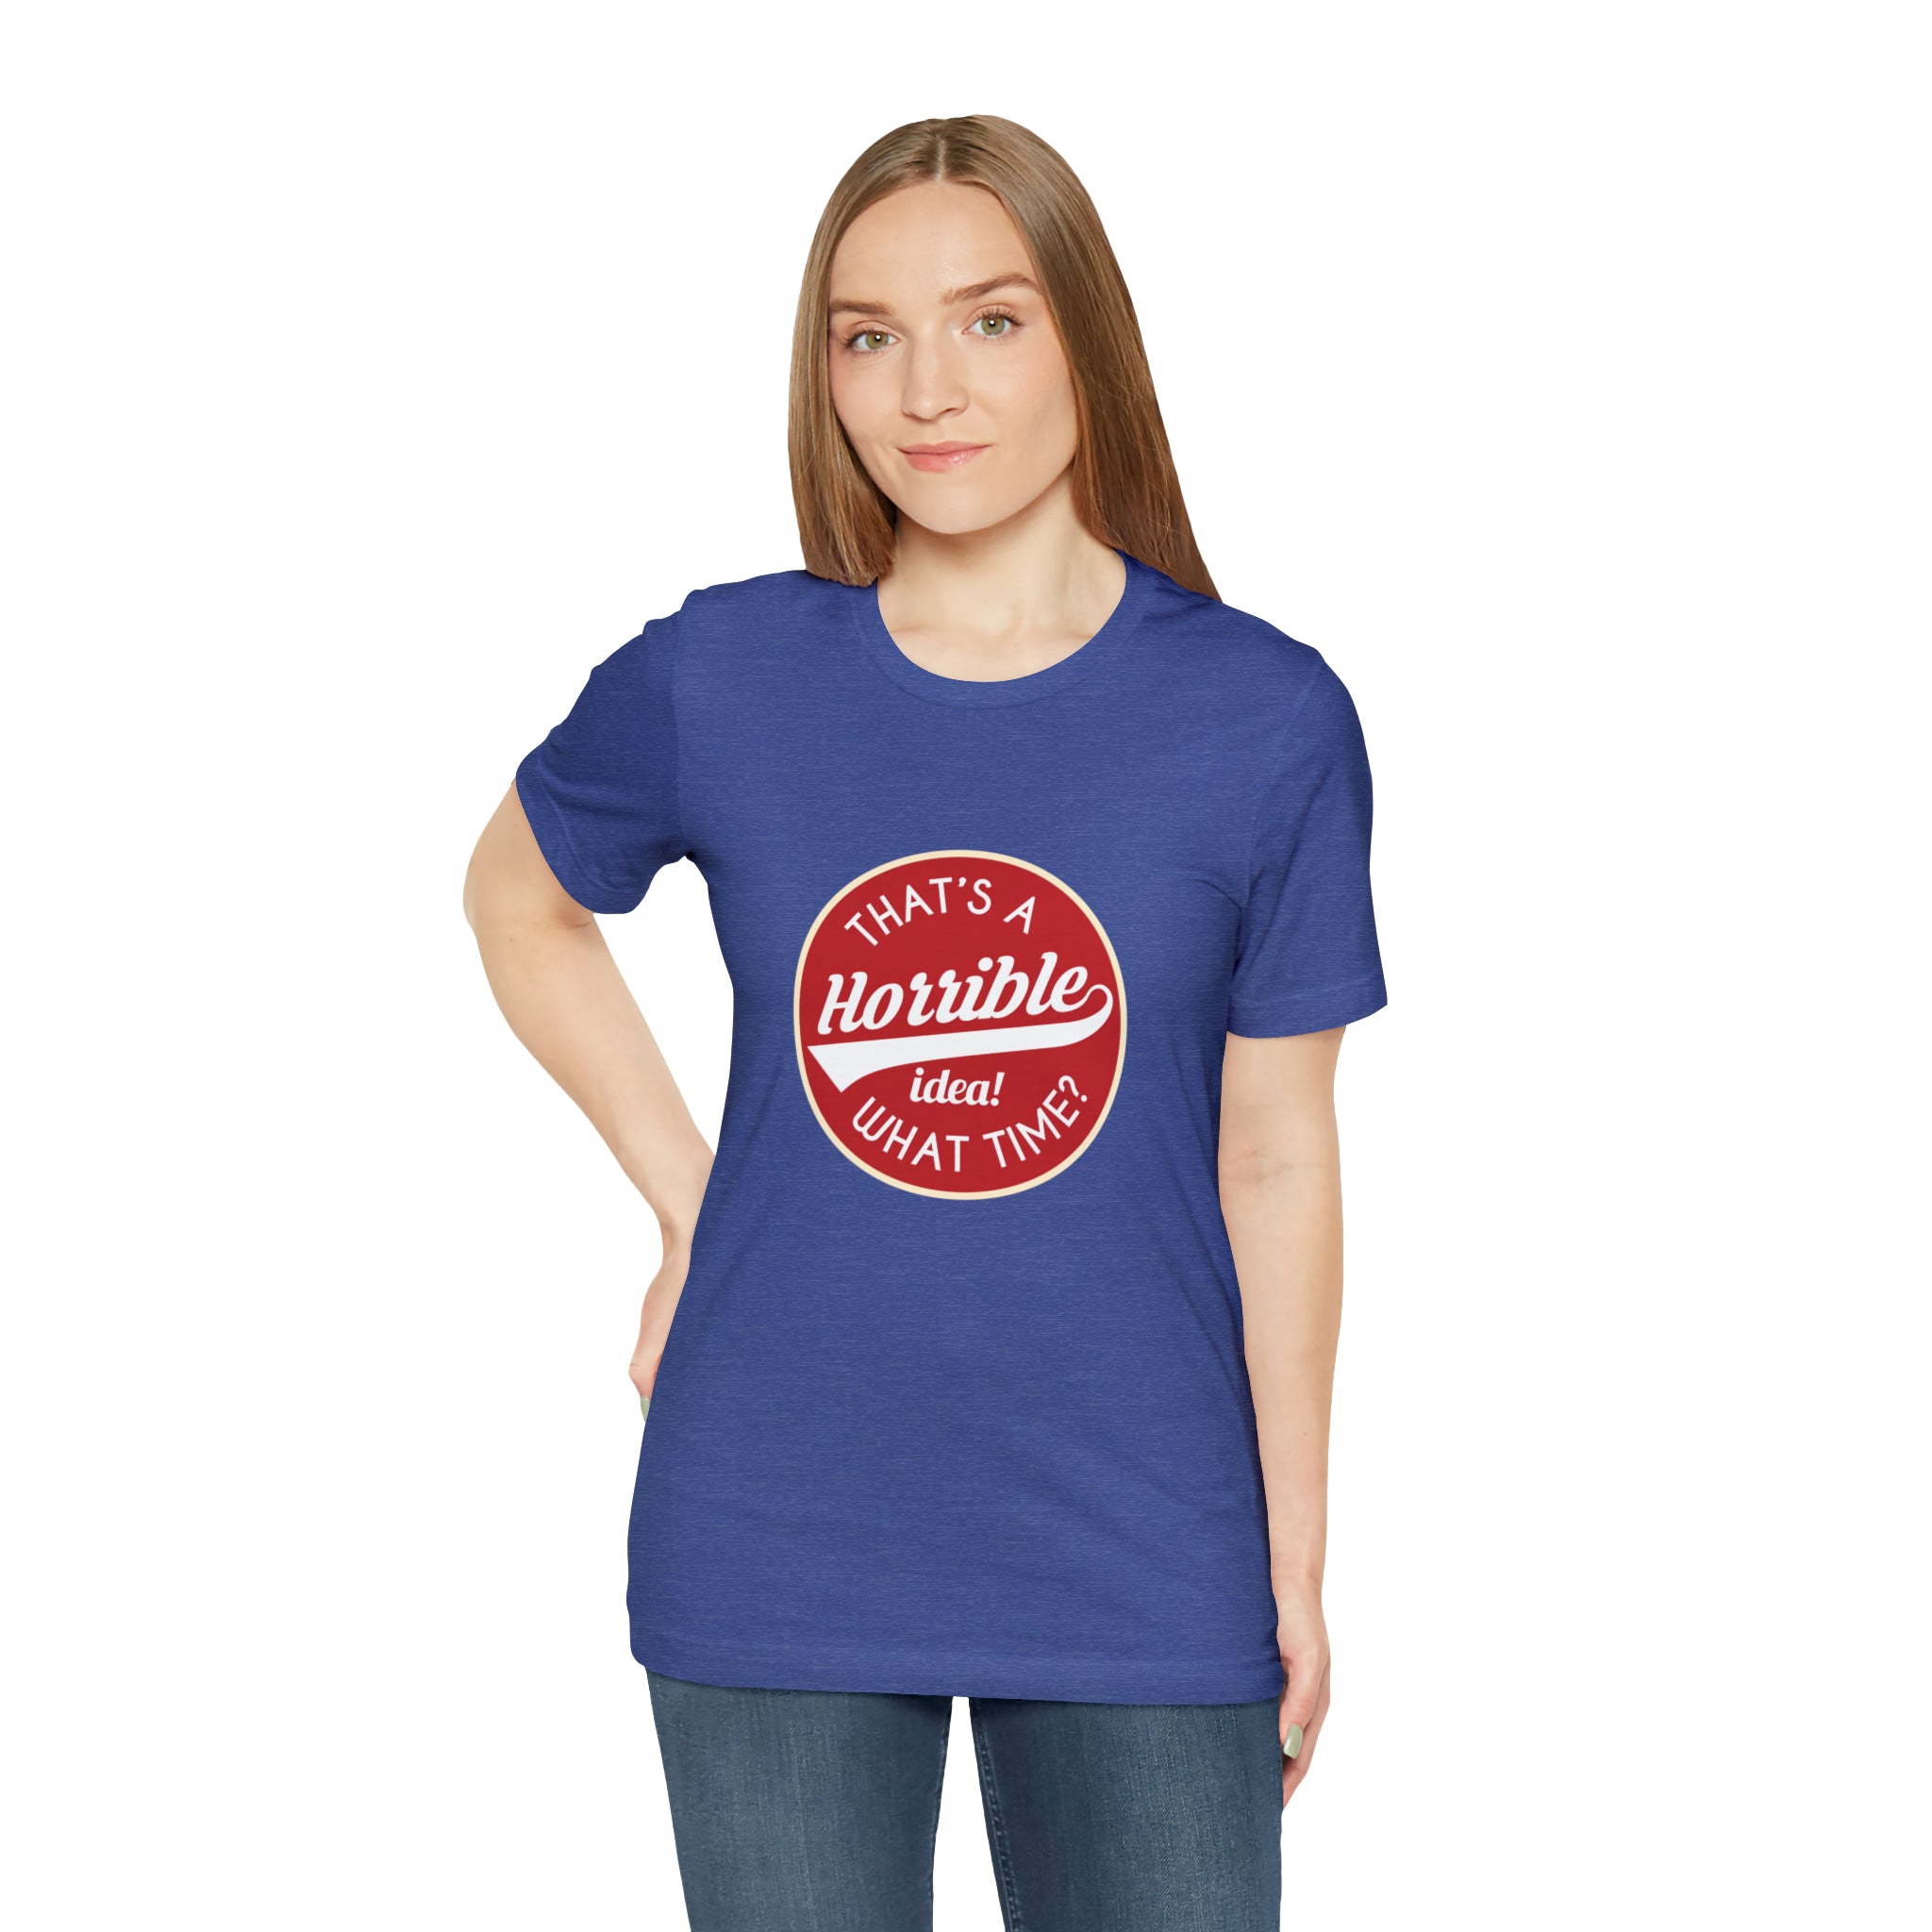 A smart-ass woman wearing a That's a horrible idea - what time T-Shirt.